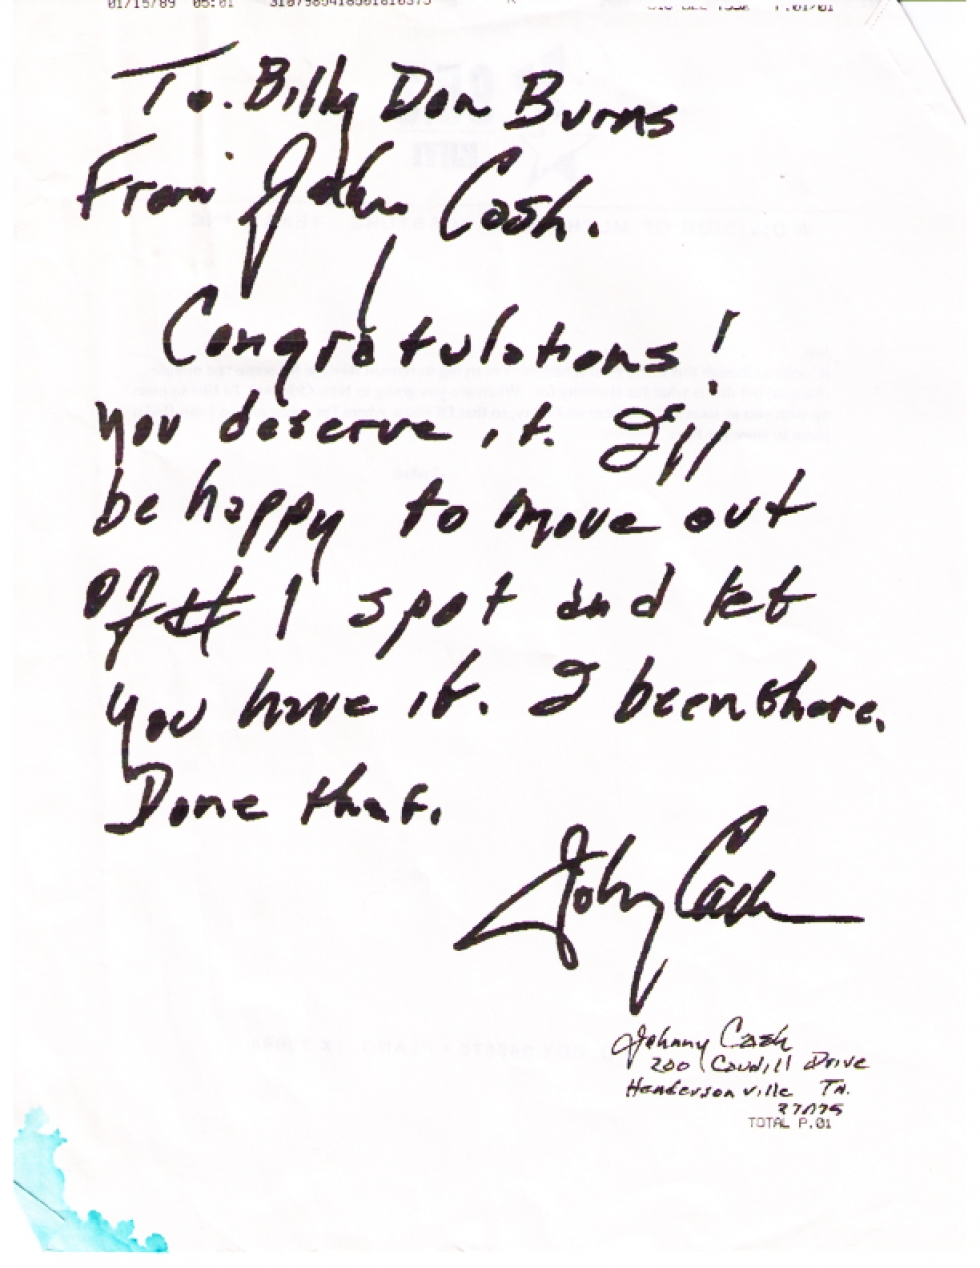 Hank Cochran Memories pt.2 – Fax from John Cash